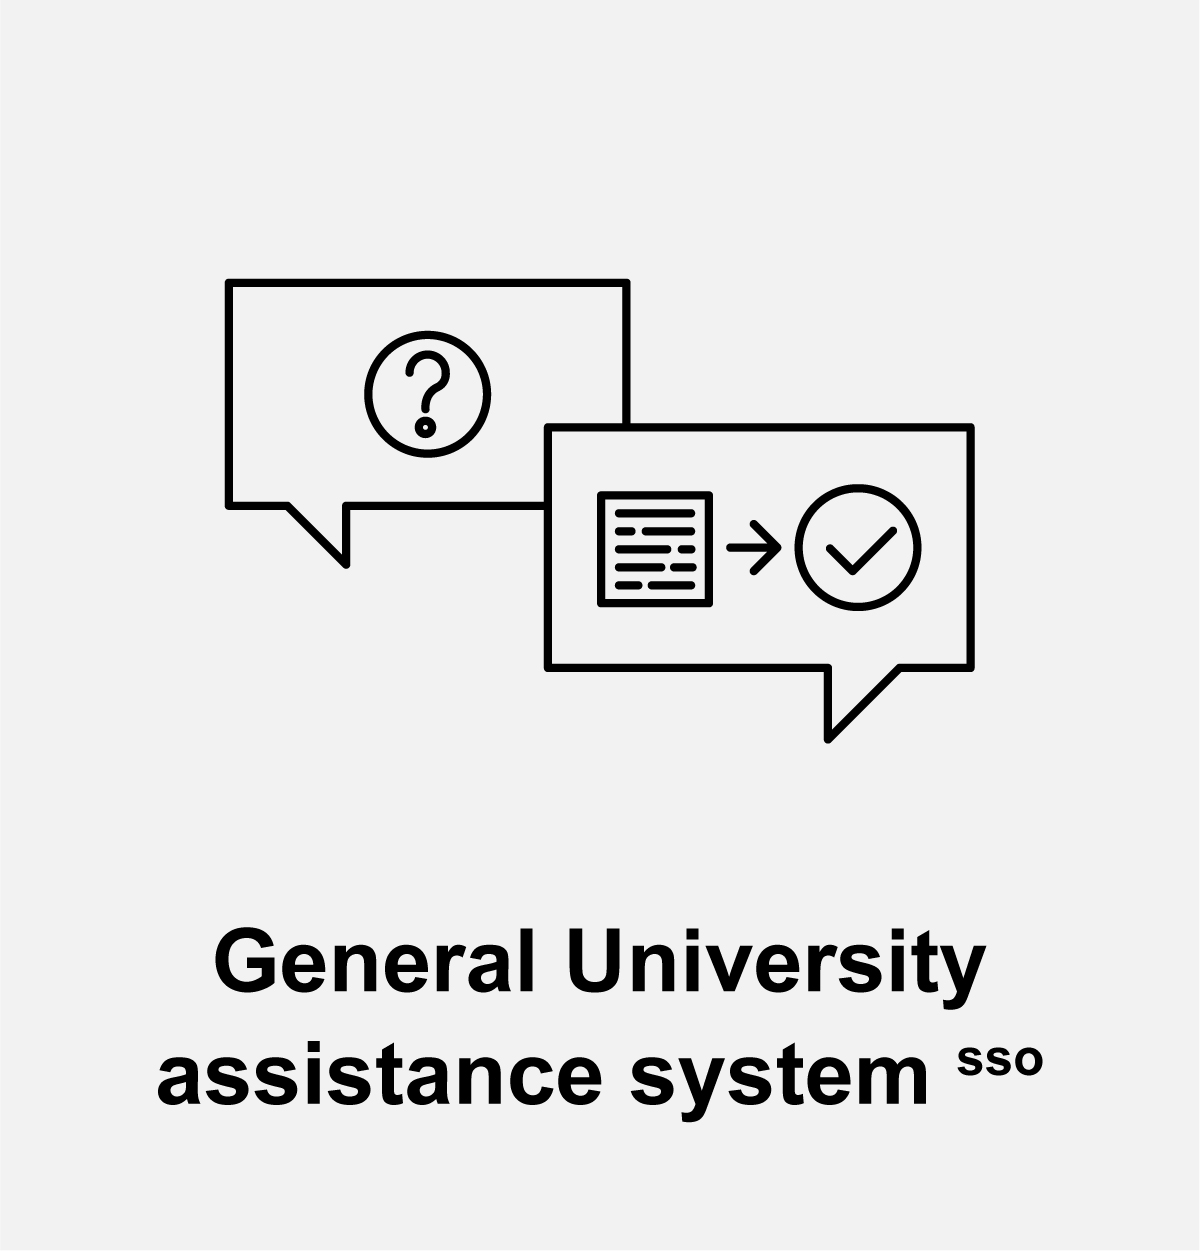 General University assistance system